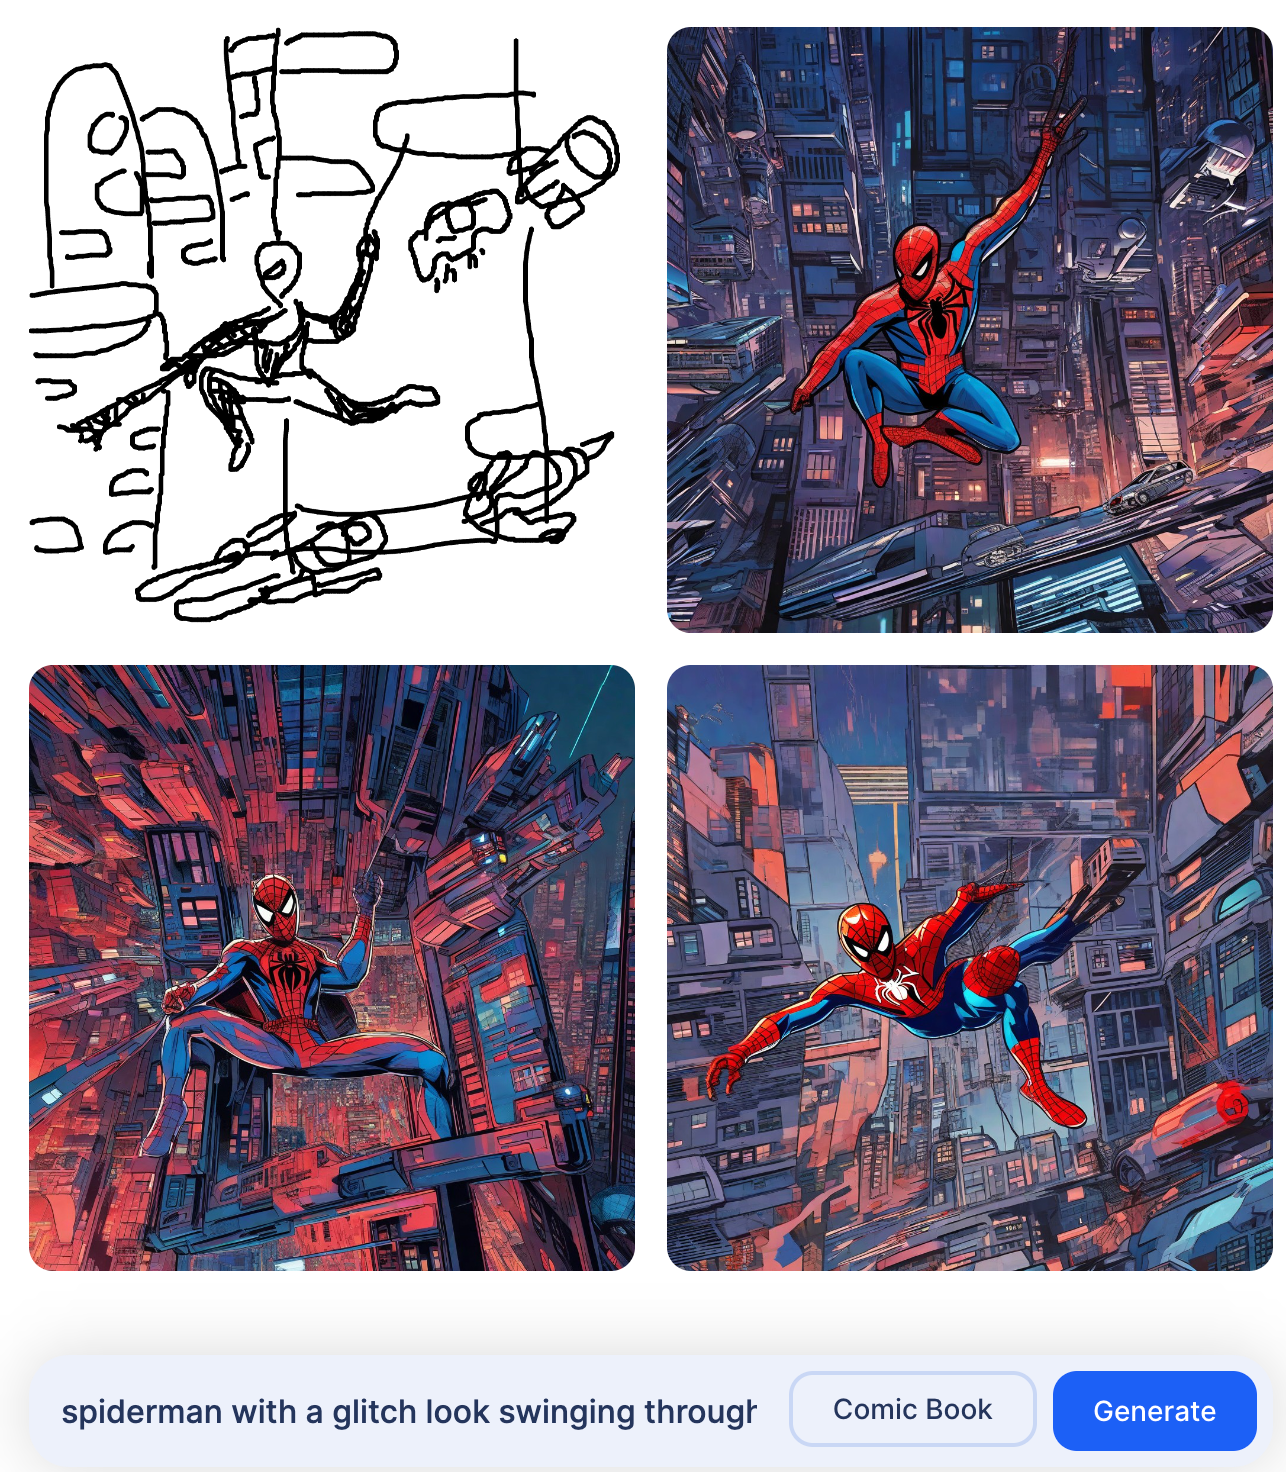 spiderman swinging through a city